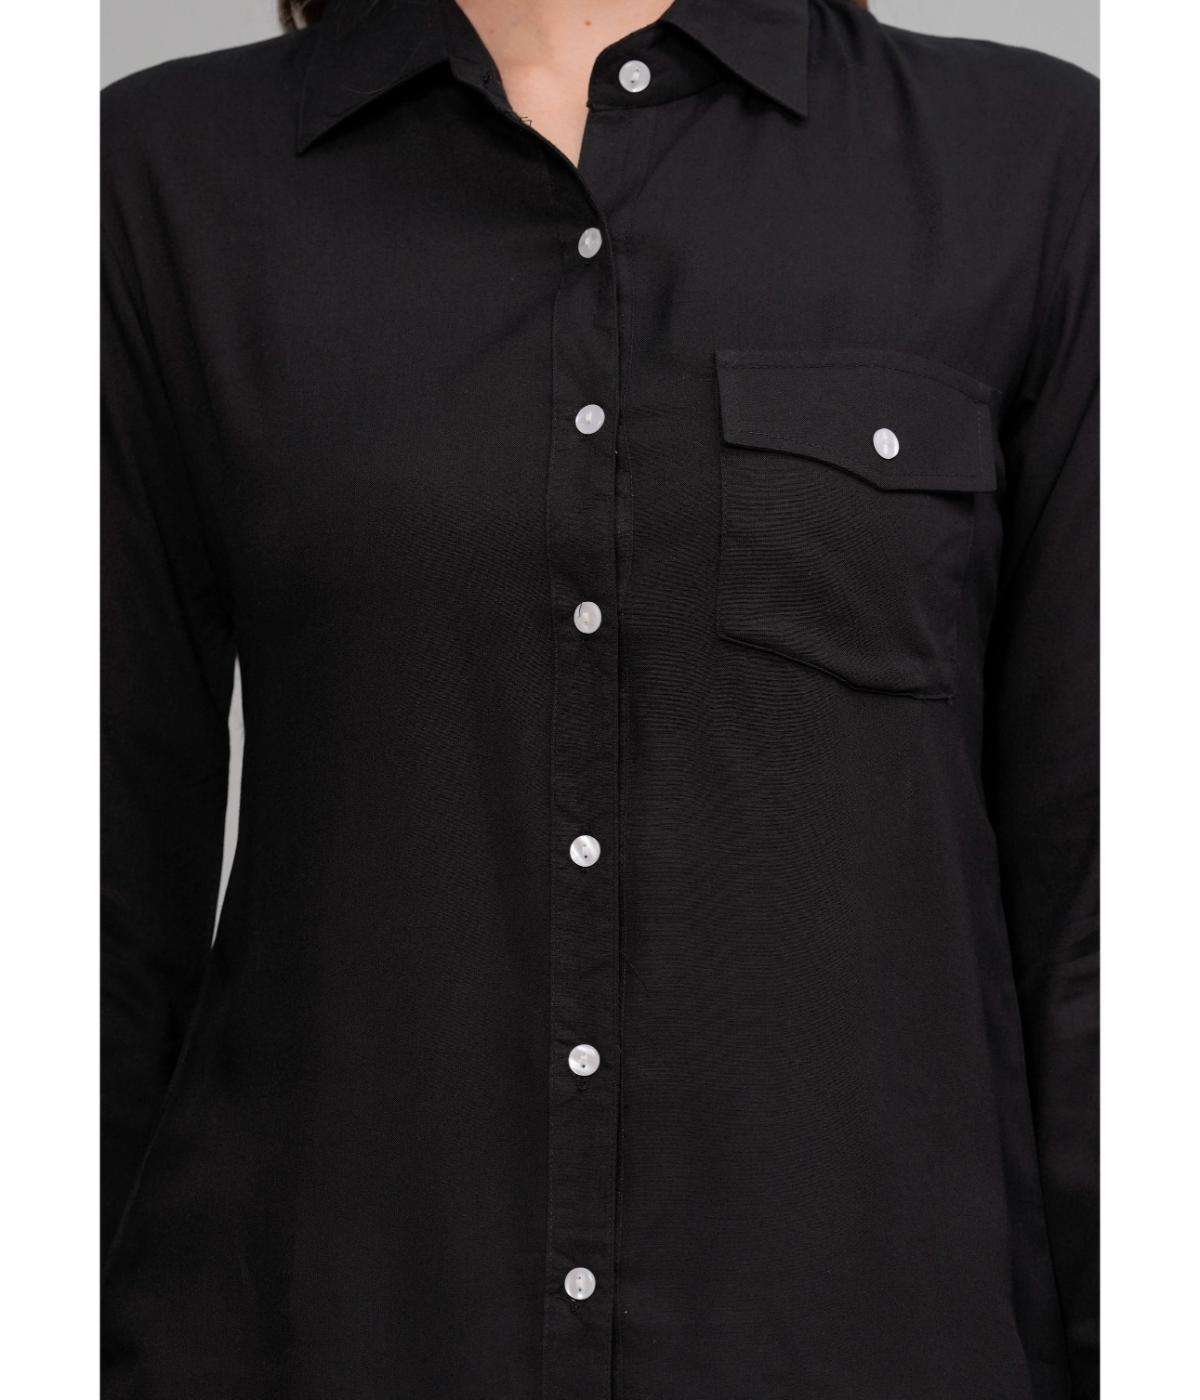 Daevish New Solid Formal Regular Cuffed Sleeves Shirt Women